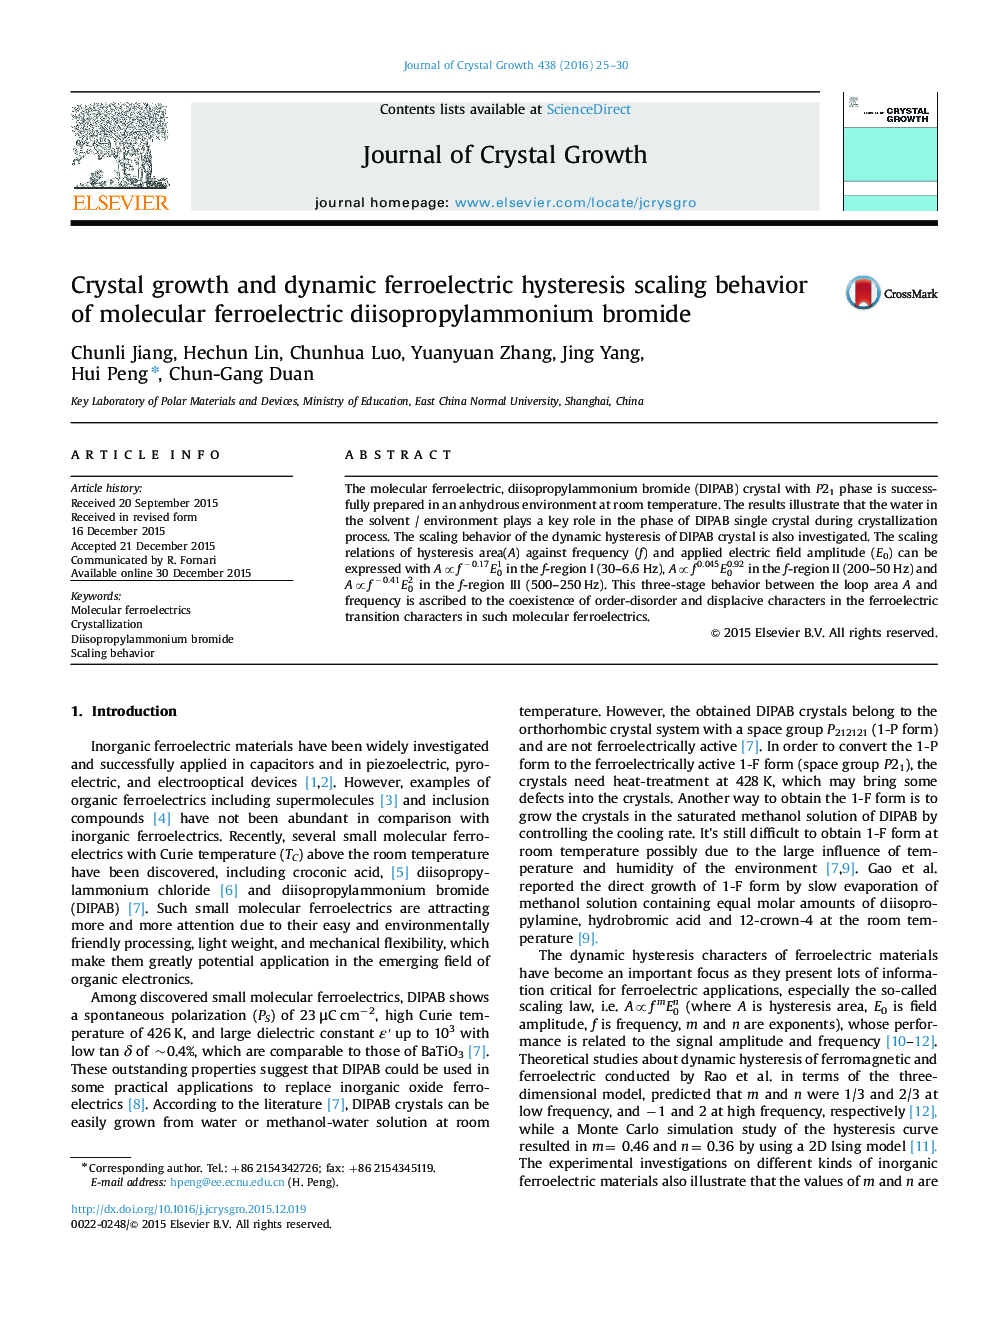 Crystal growth and dynamic ferroelectric hysteresis scaling behavior of molecular ferroelectric diisopropylammonium bromide